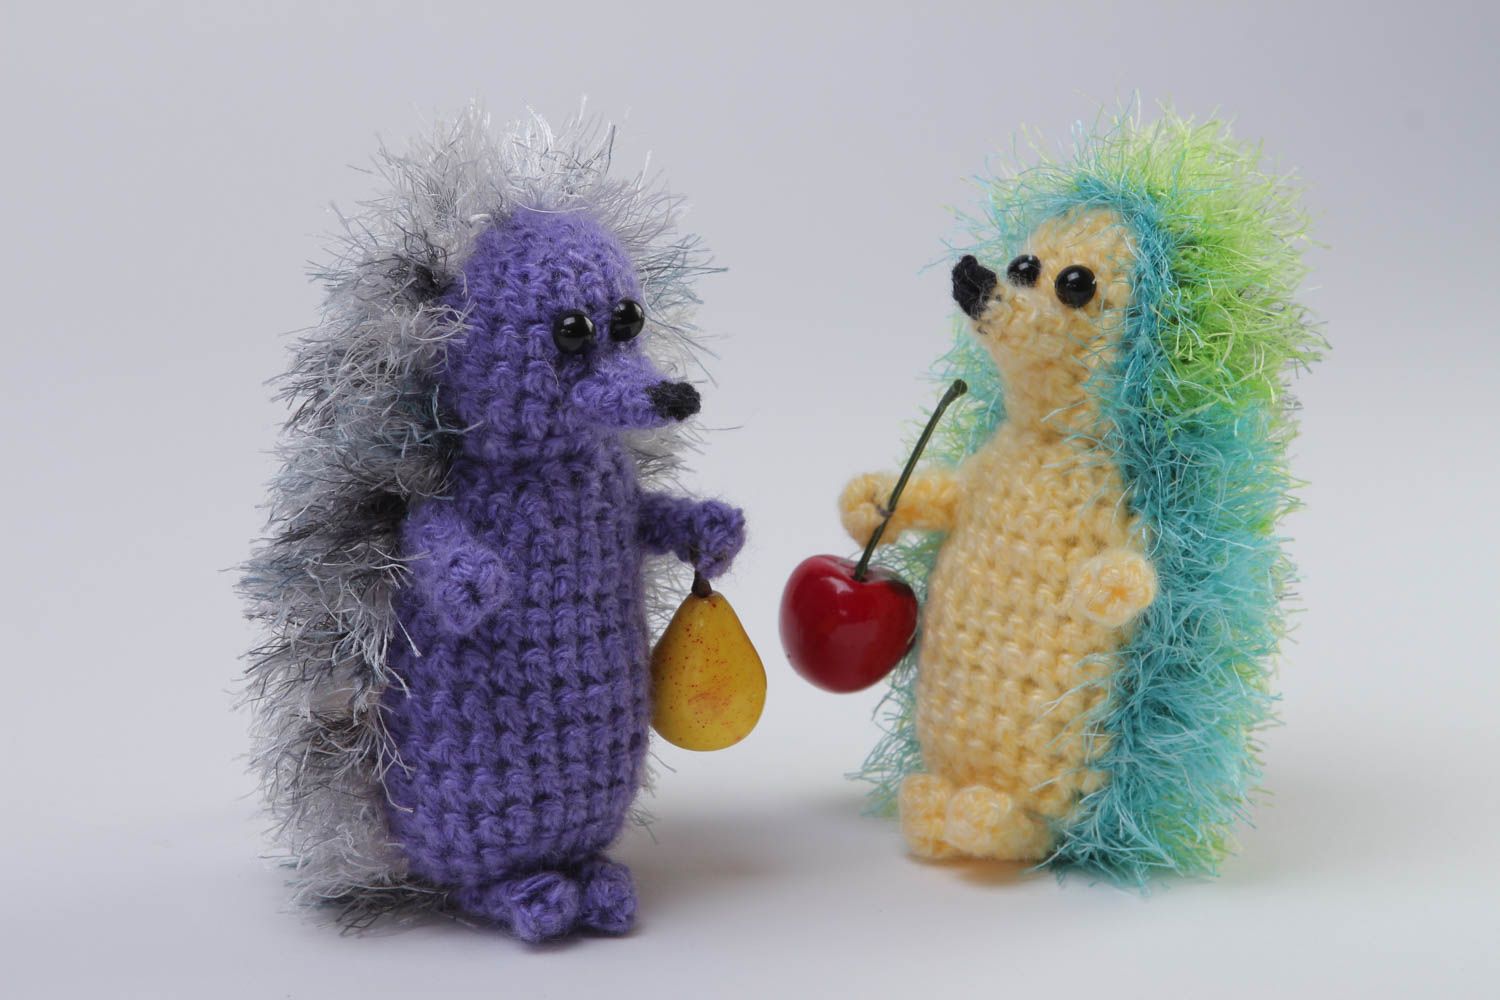 Handmade crocheted toys 2 hedgehogs figurines designer interior toy present photo 2